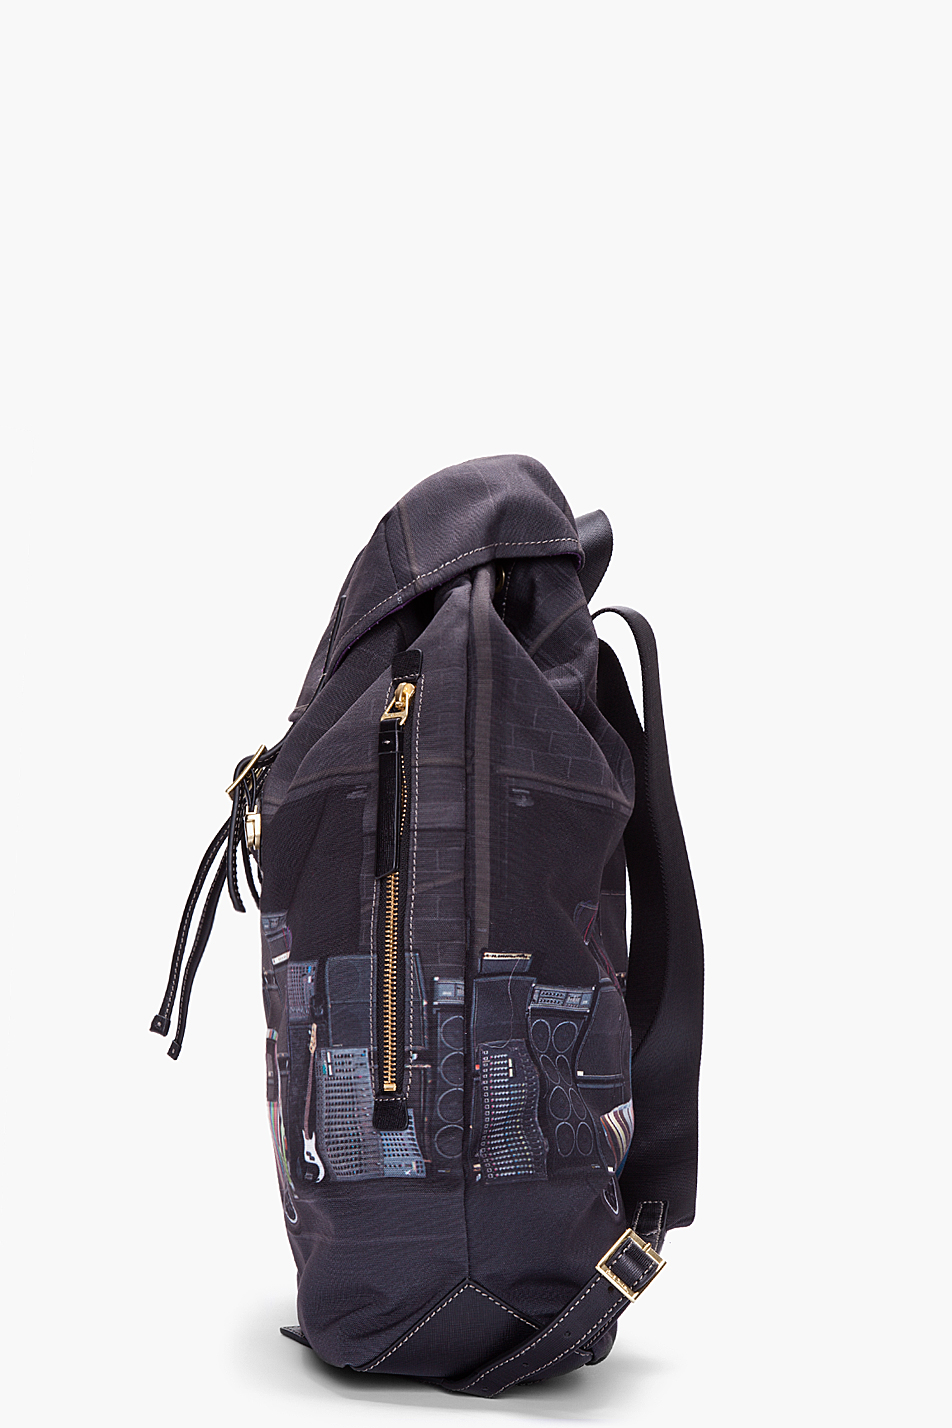 Mini Cooper Backpack Hot Sale, 60% OFF | www.ingeniovirtual.com